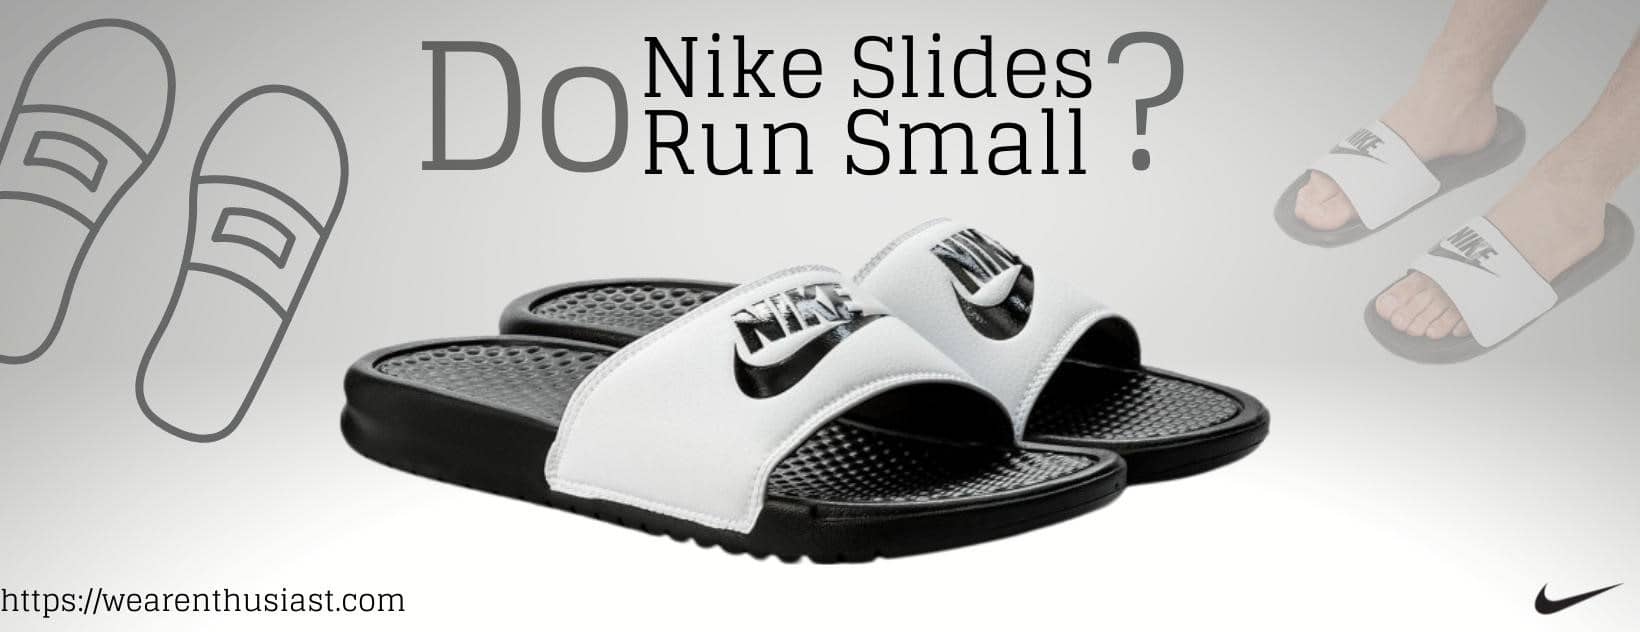 Do Nike Slides Run Small?